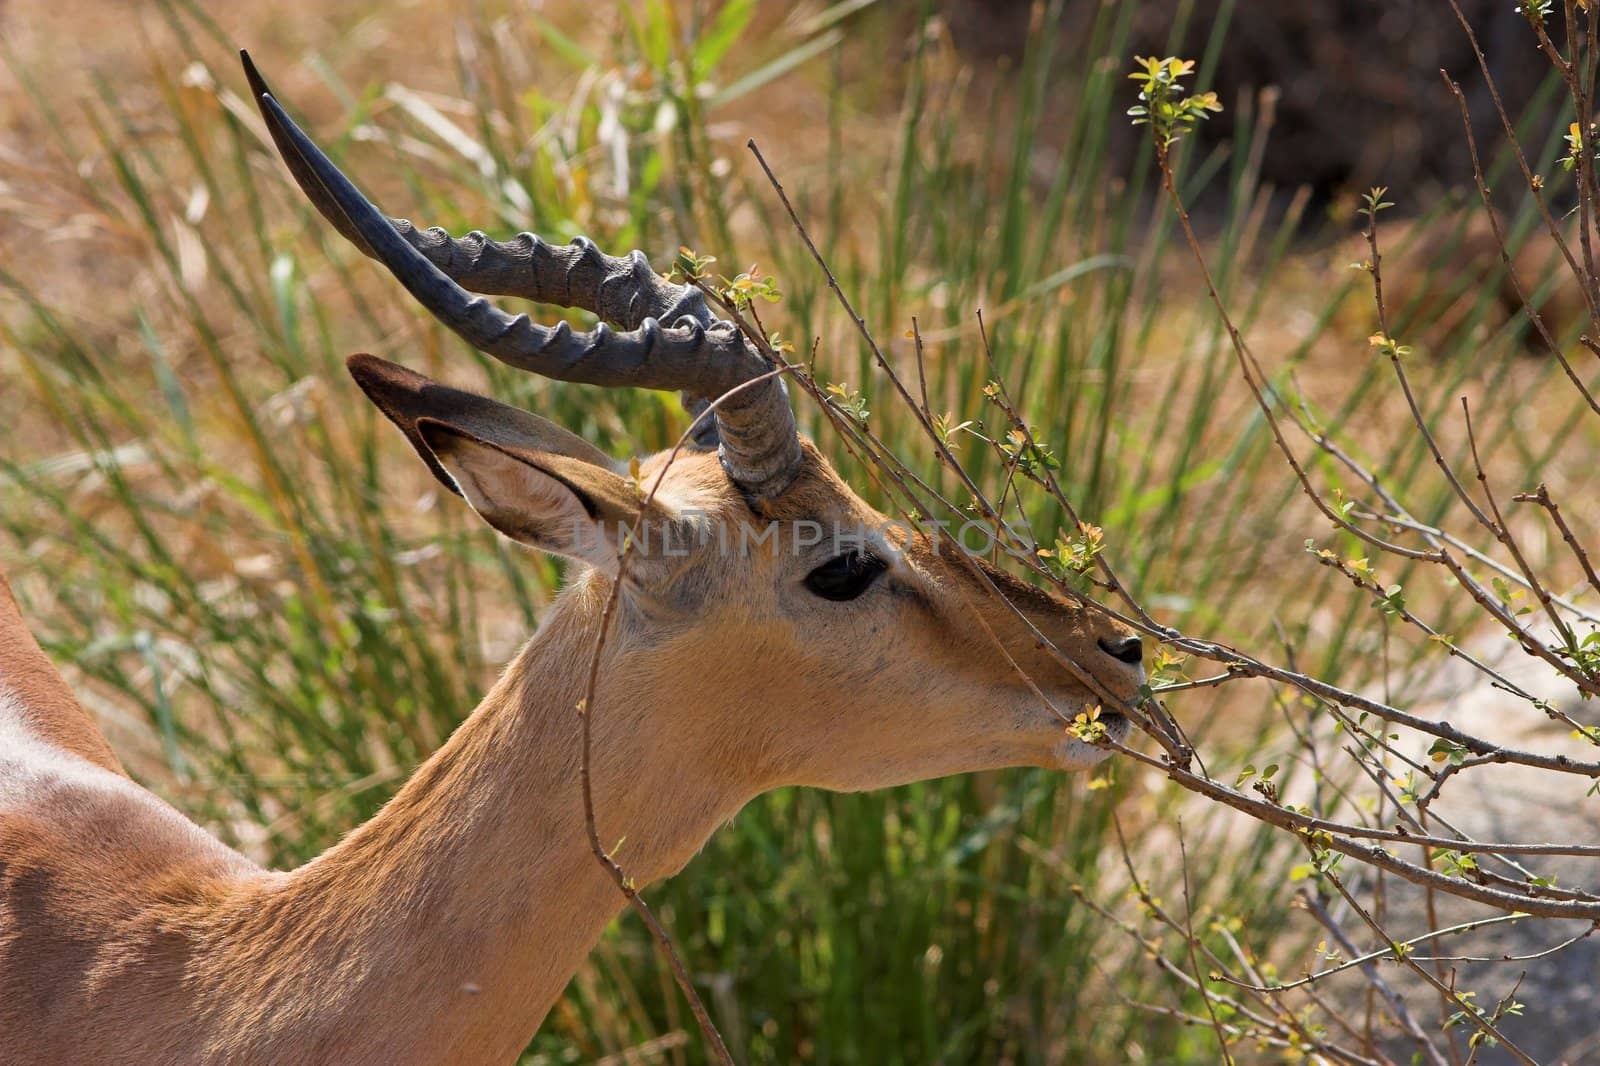 Adult Impala male feeding on fresh leaves